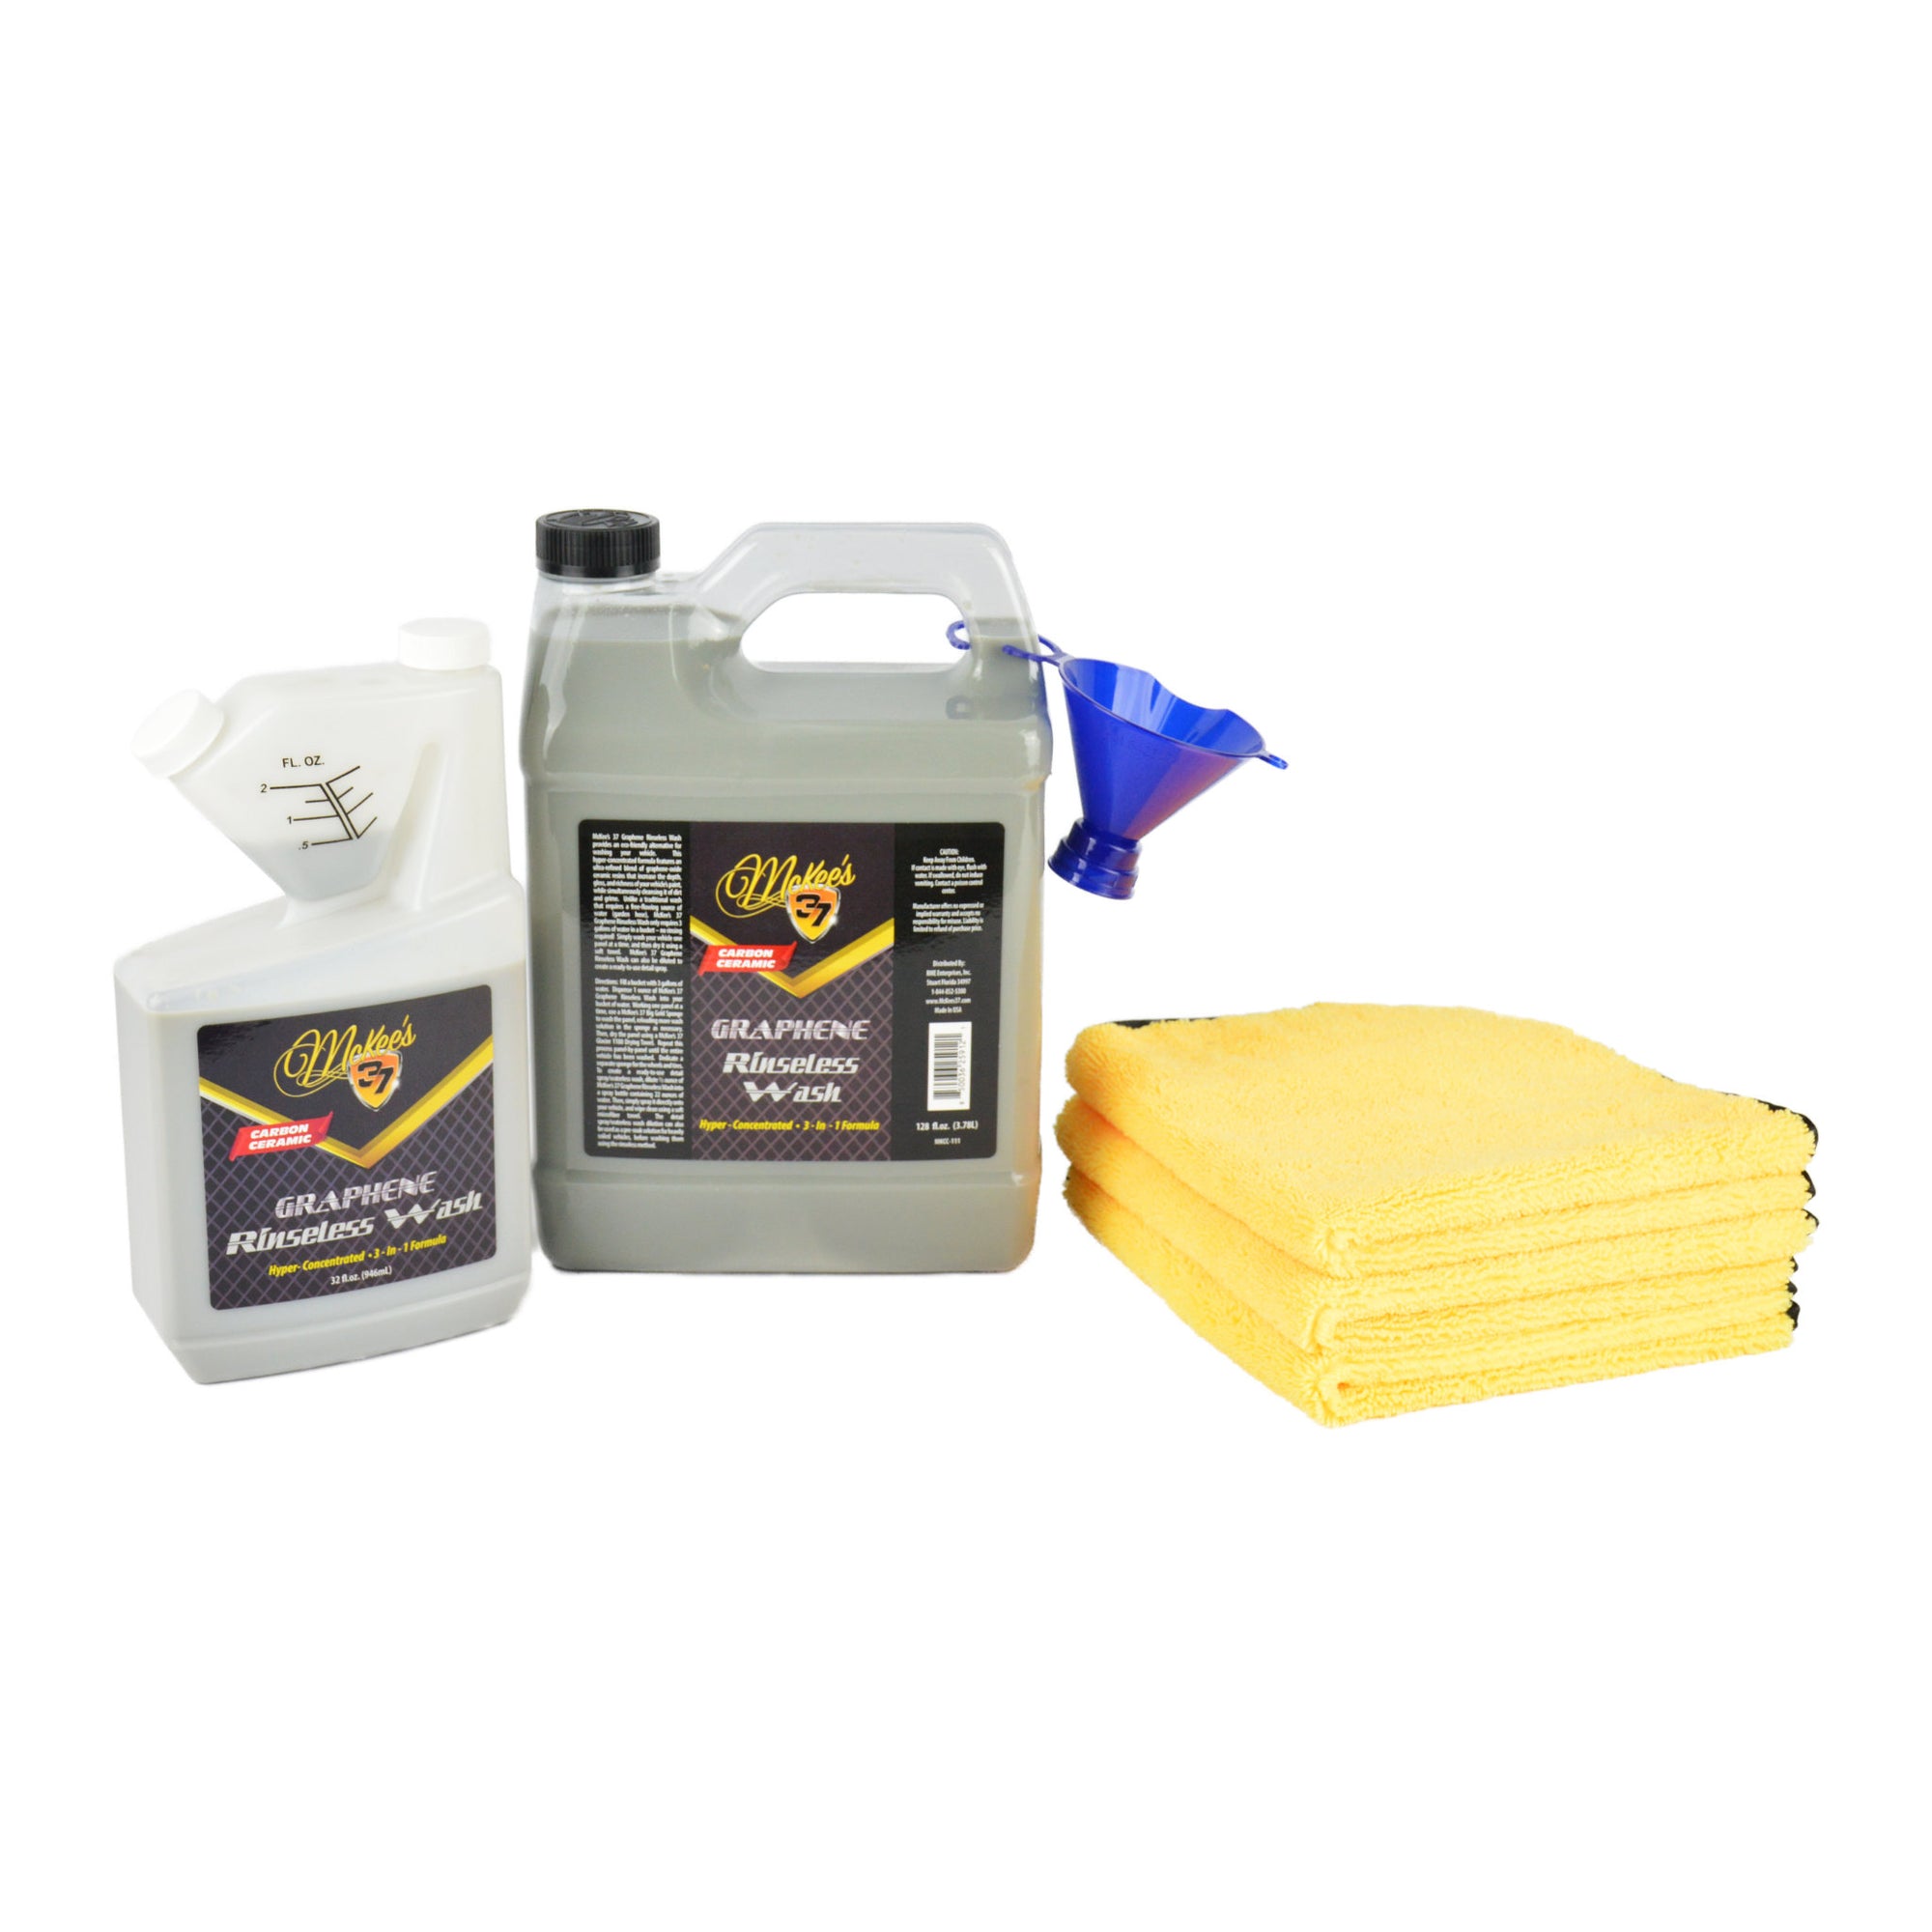  Auto Magic Wash & Wax - Car Wash Soap for Acrylic, Vinyl,  Lacquer, Enamel and More - 128 Fl Oz : Automotive